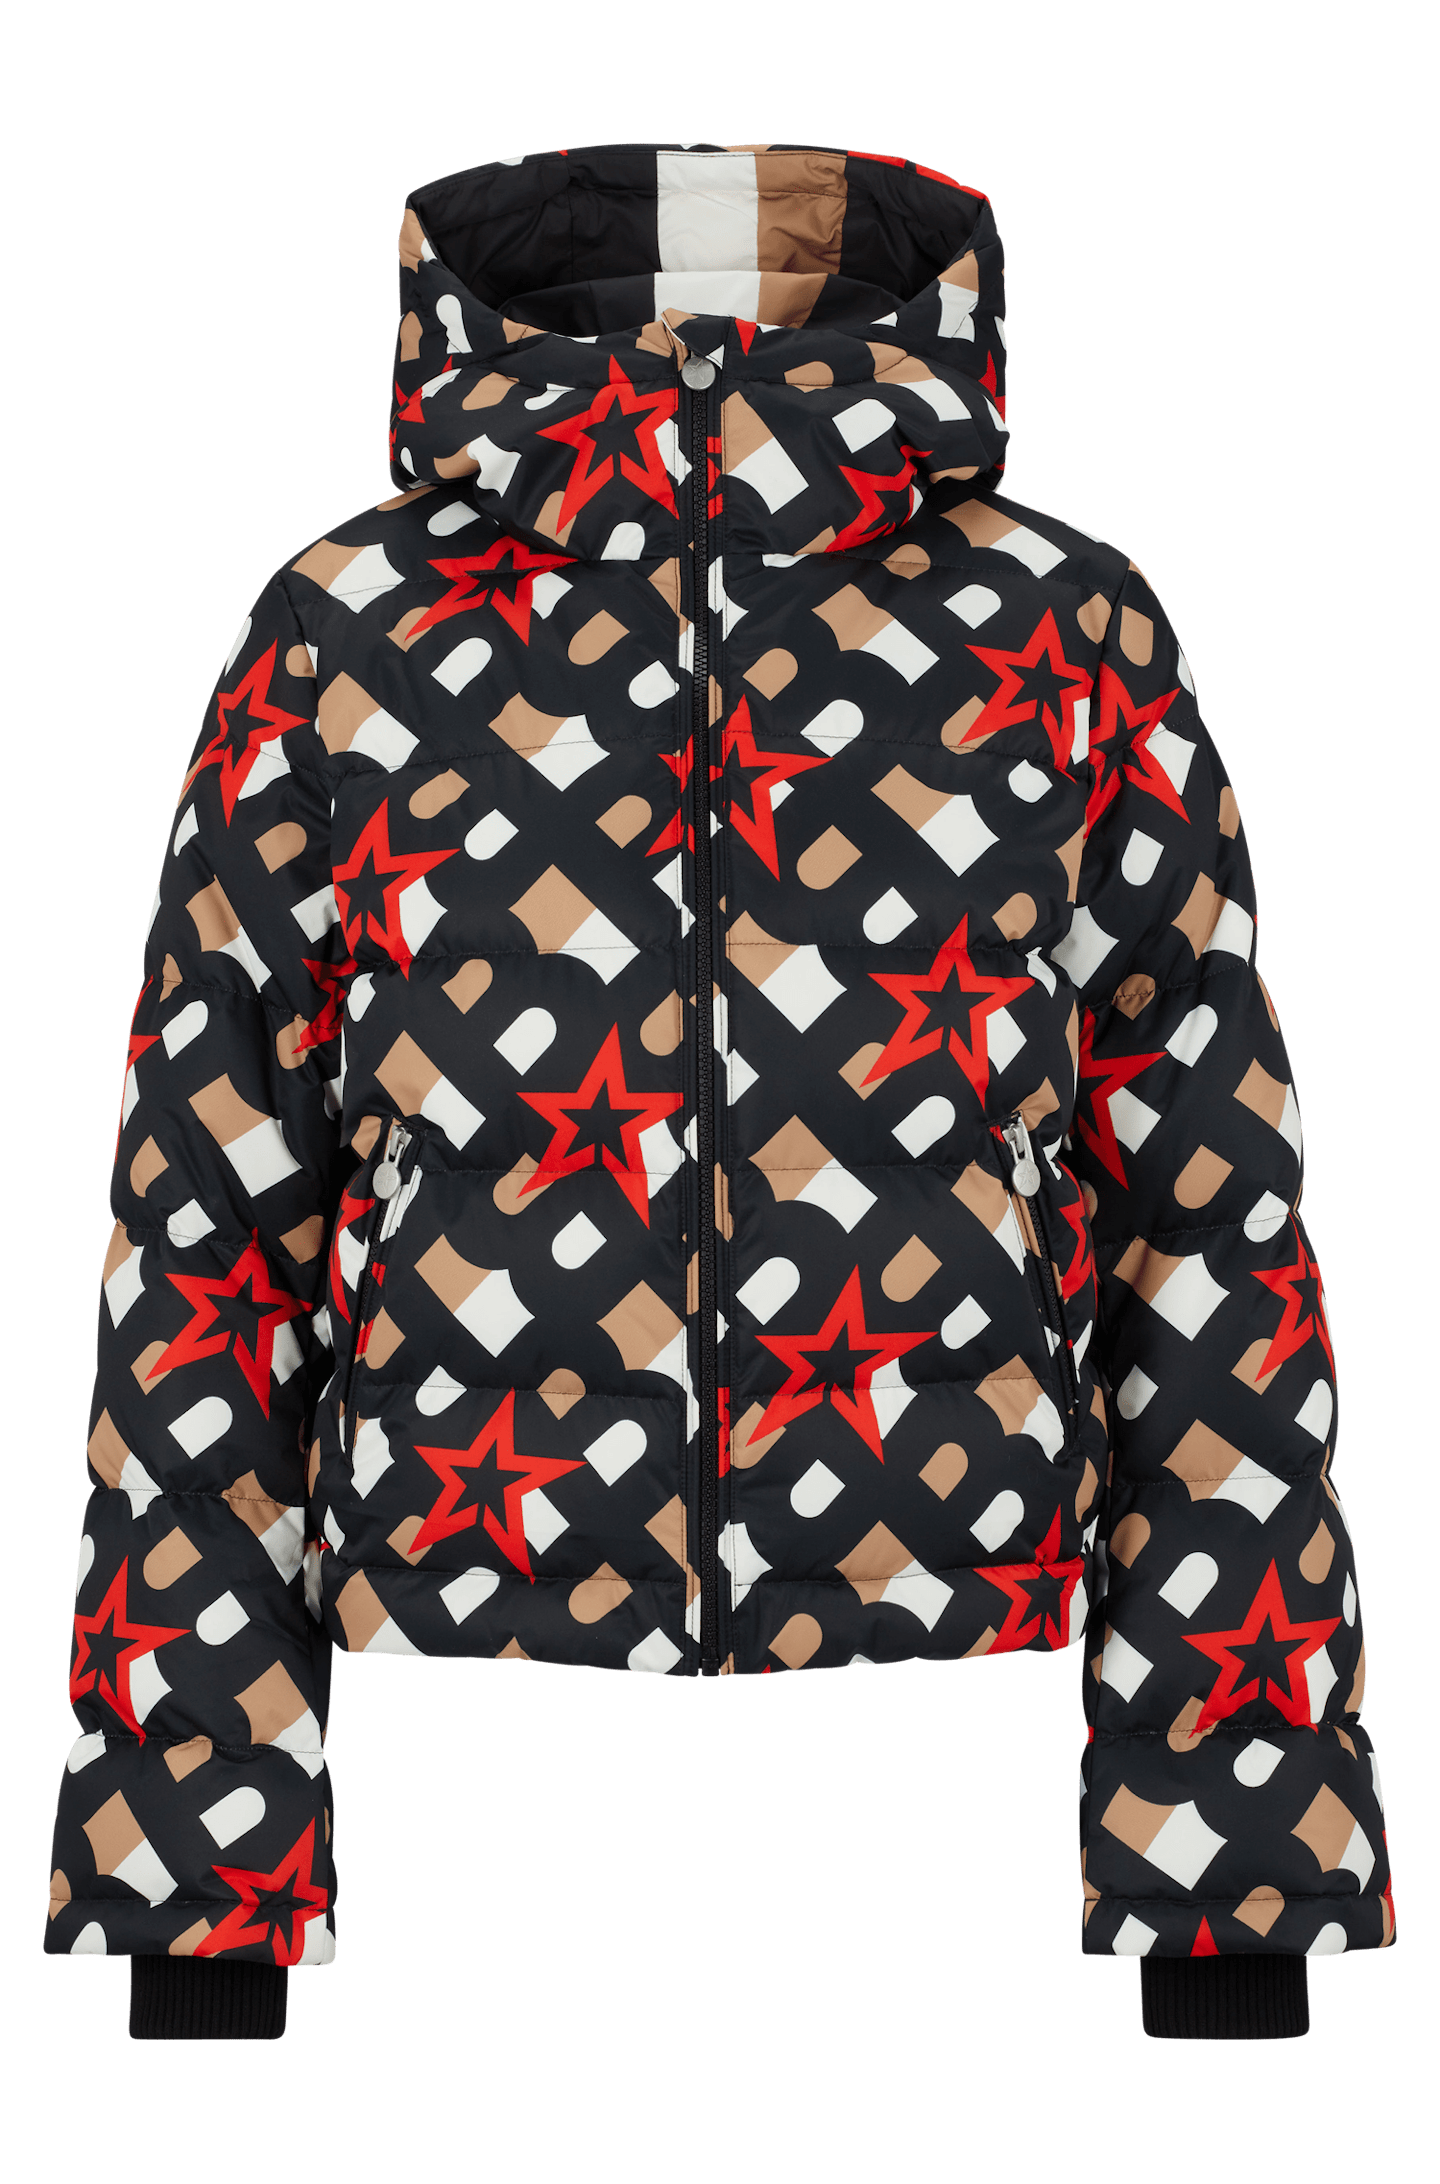 Black Patterned Jacket With Capsule Detailing